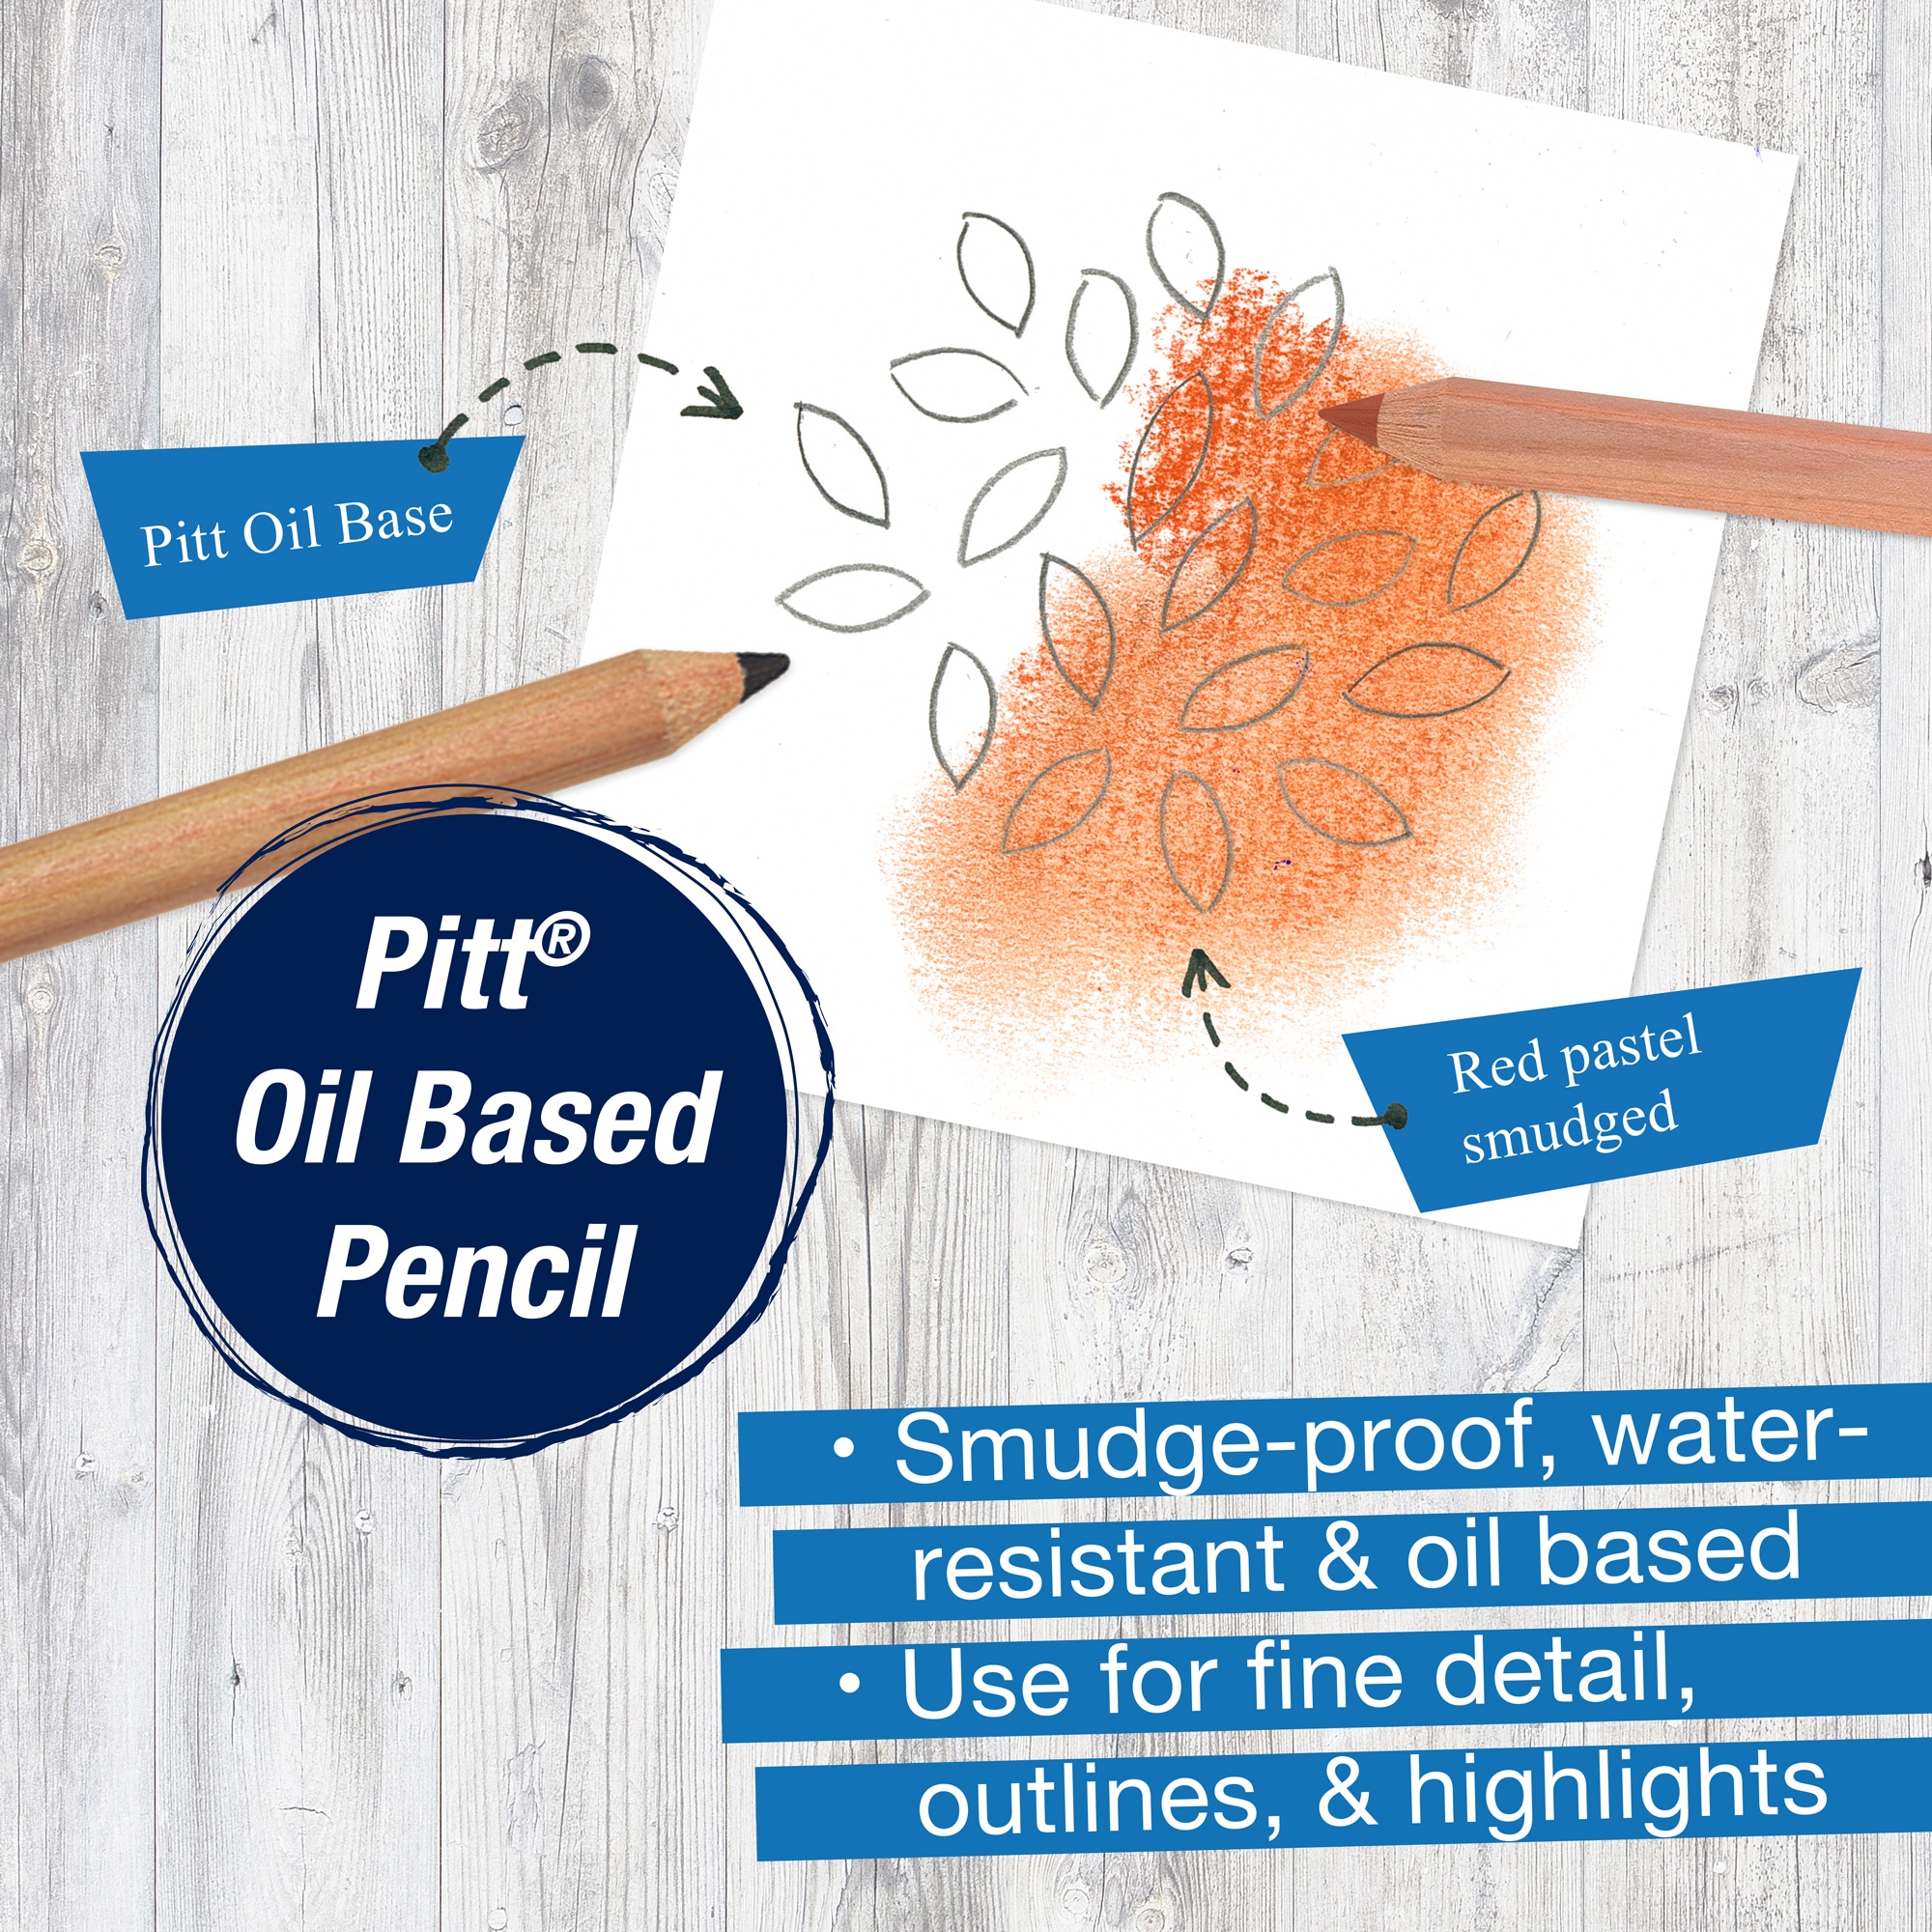 Pitt Oil Base pencil, black extra soft